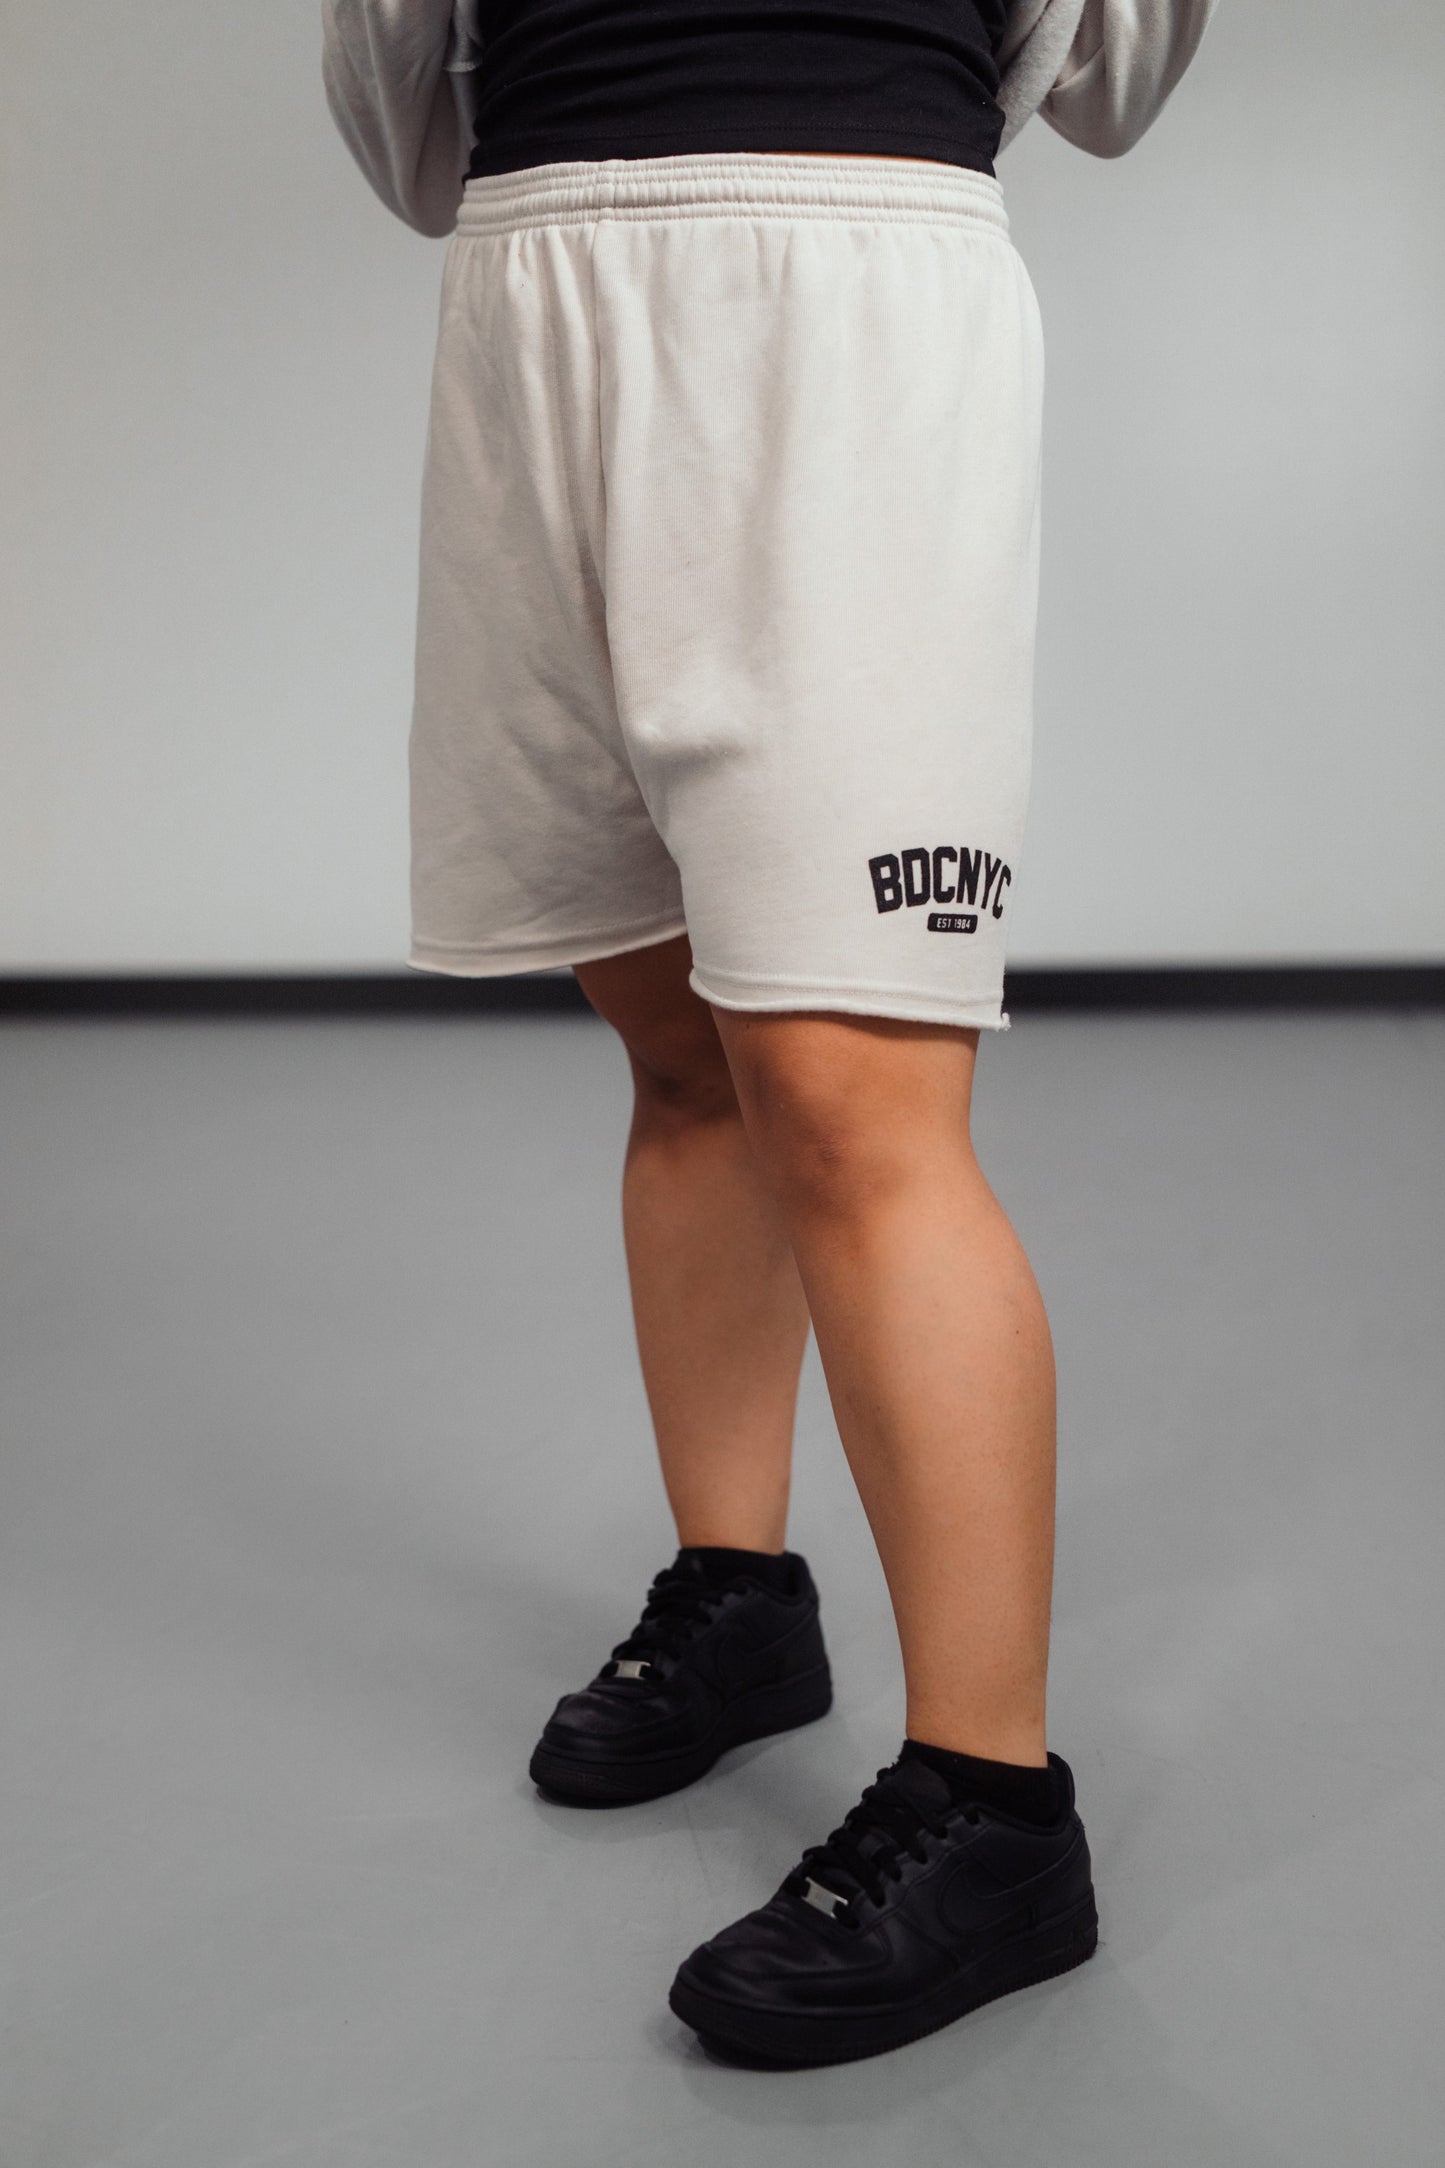 BDCNYC Sweat Shorts